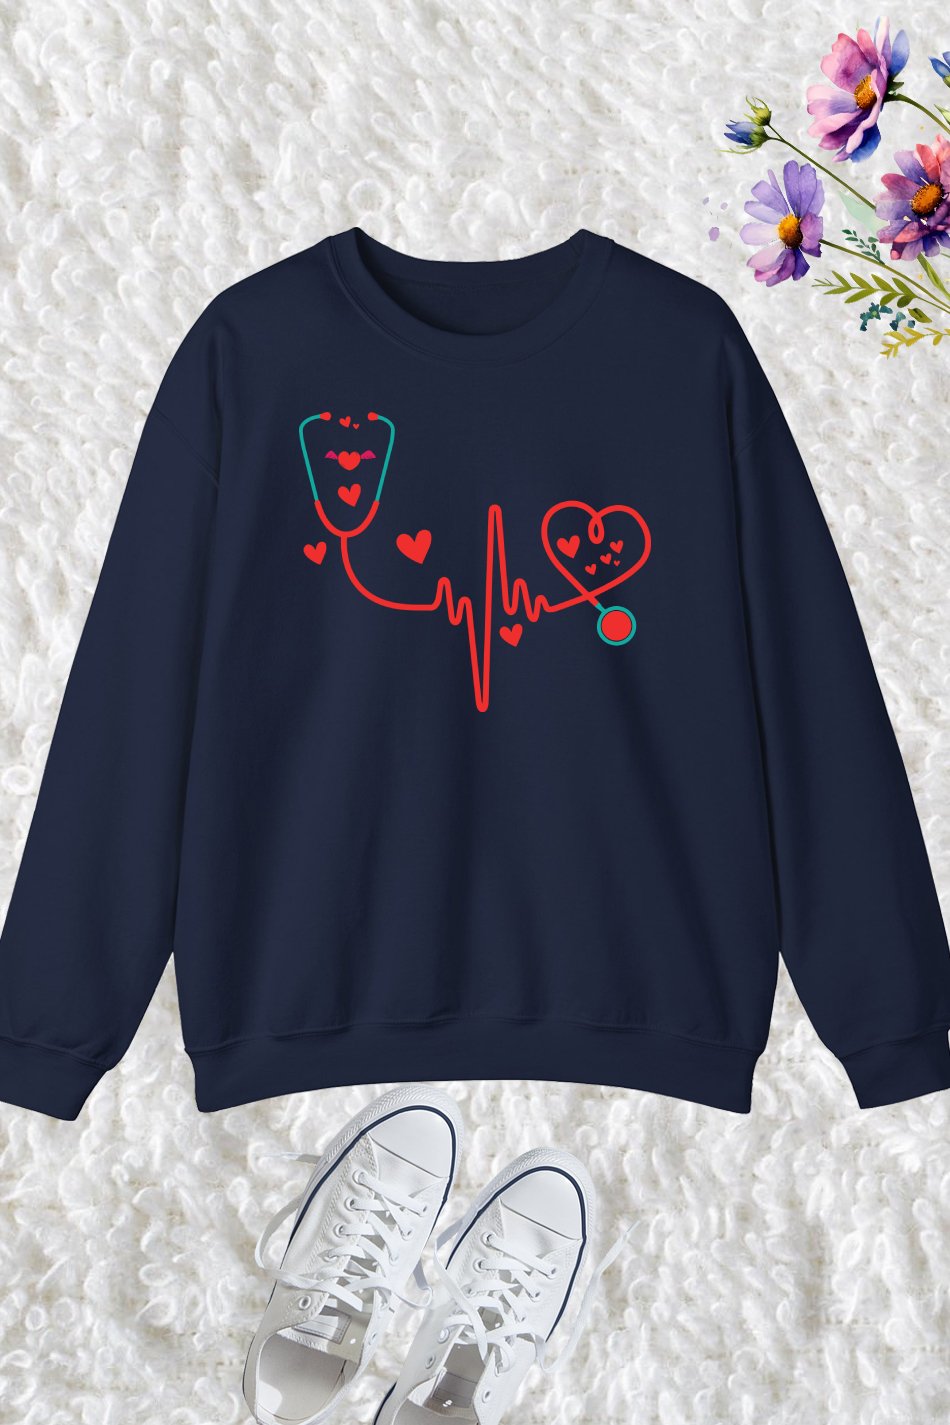 Heart Day Nurse Sweatshirt